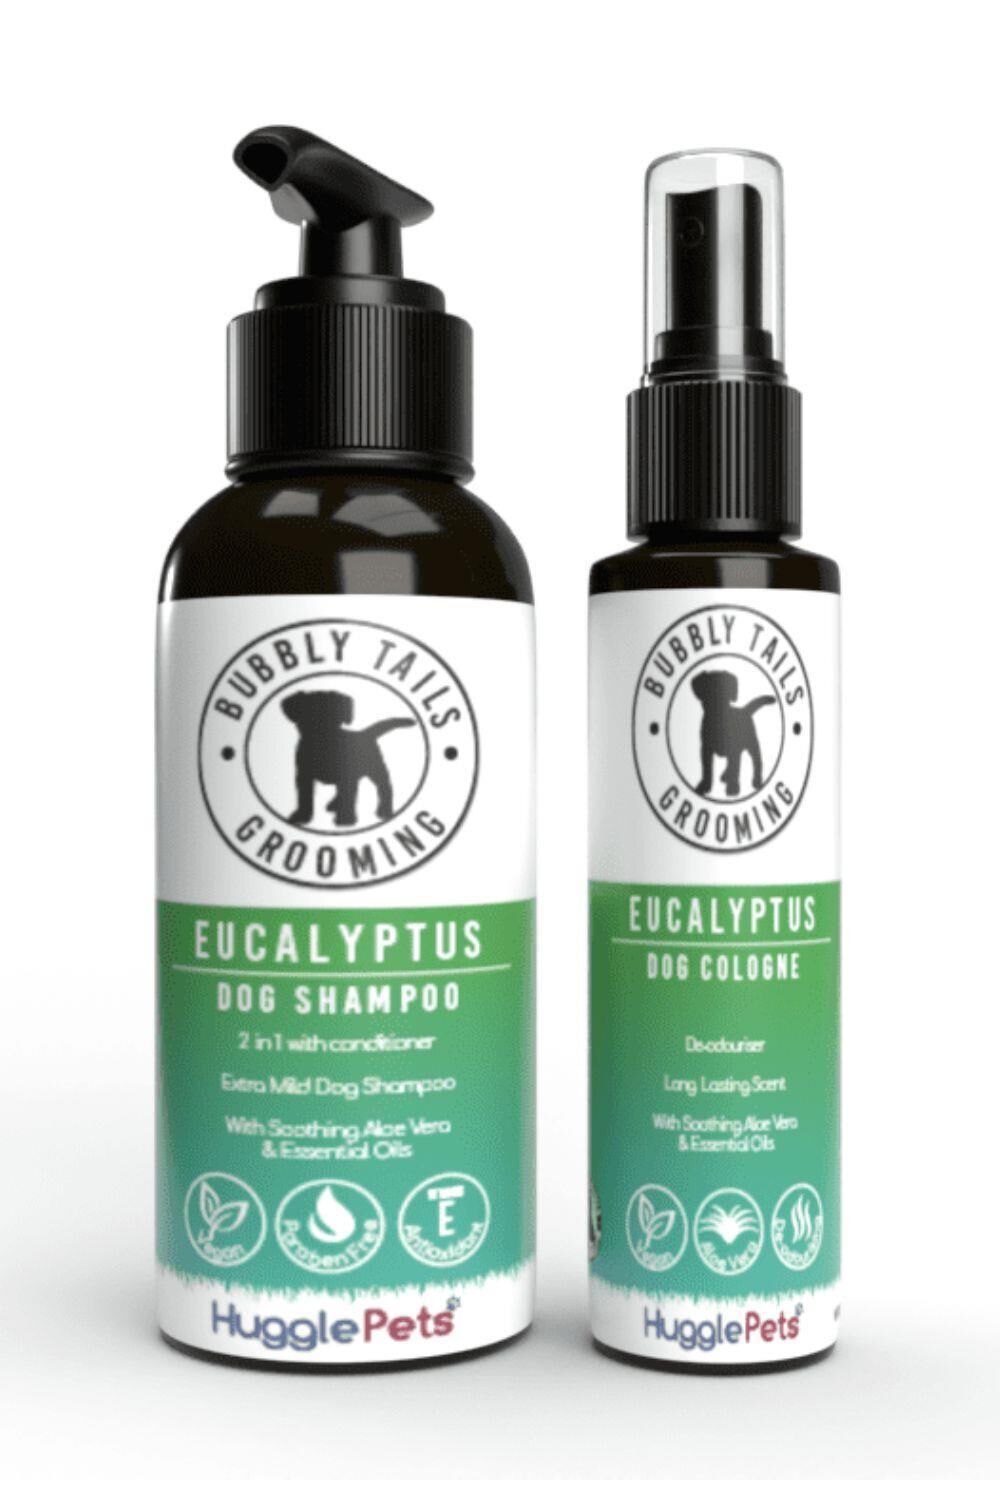 HUGGLEPETS HugglePets Bubbly Tails Eucalyptus 2 in 1 Dog Shampoo & Deodorising Cologne Set